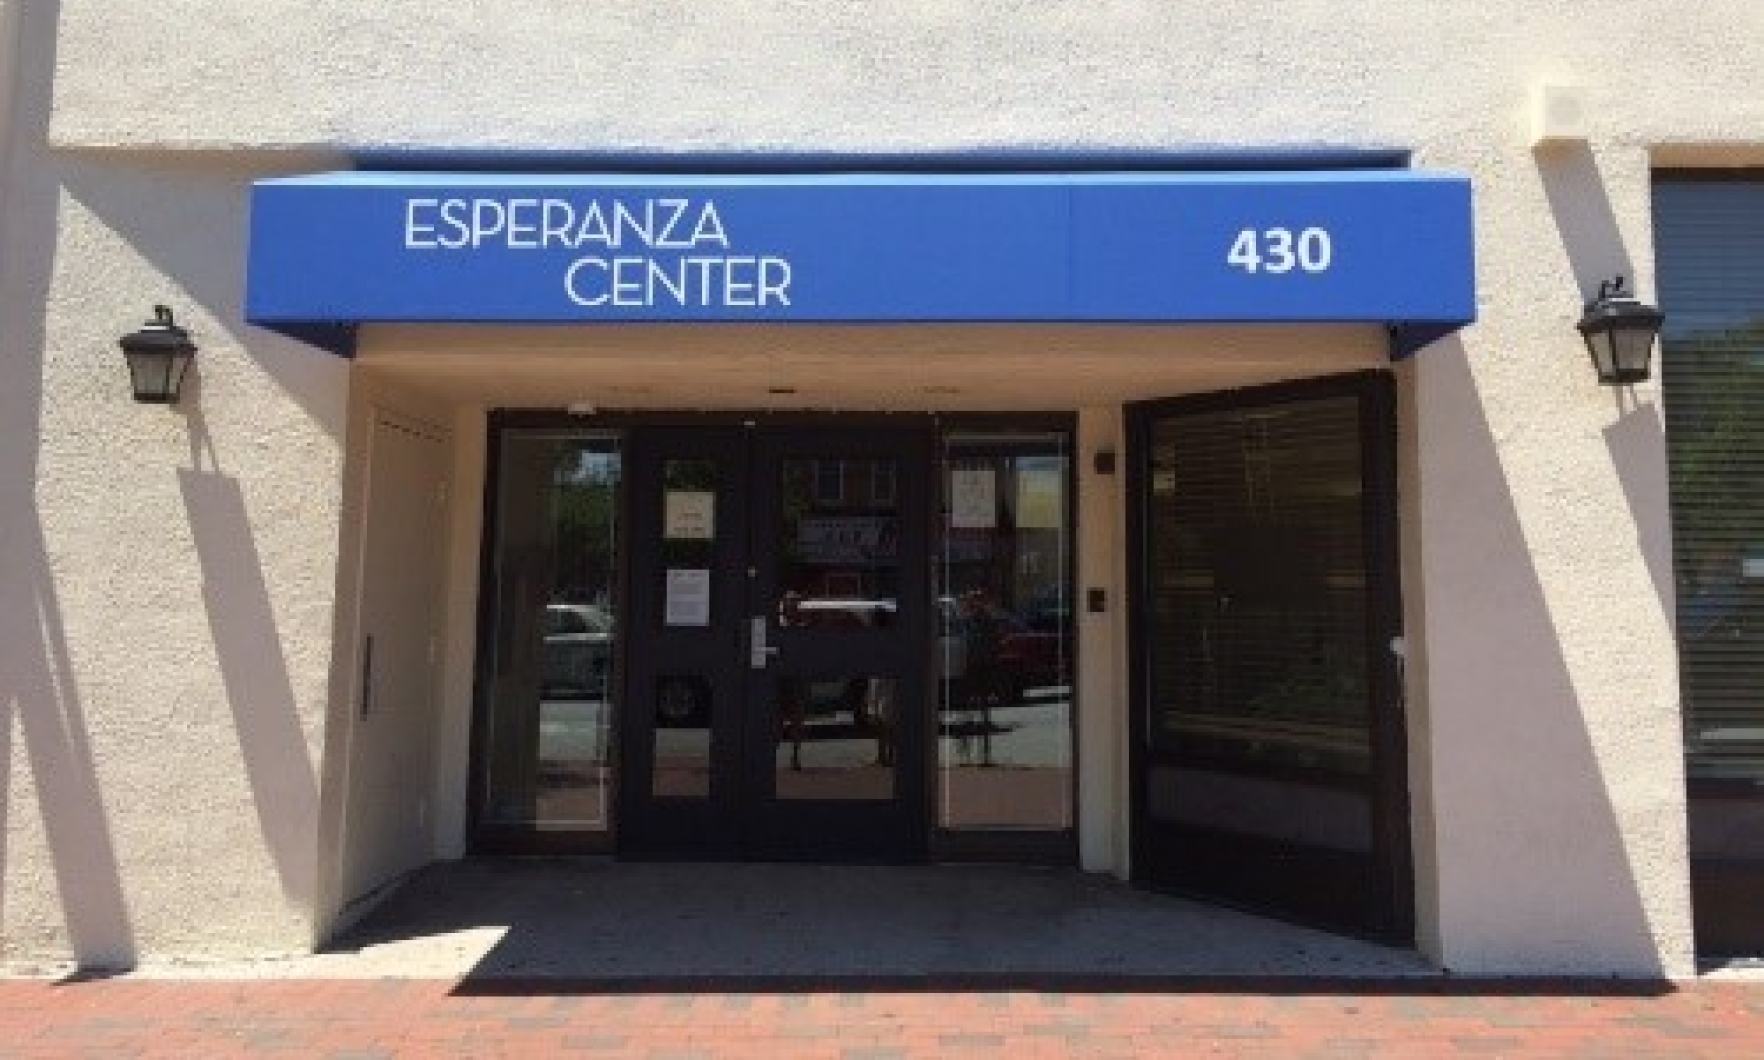 Esperanza Center - Front of building